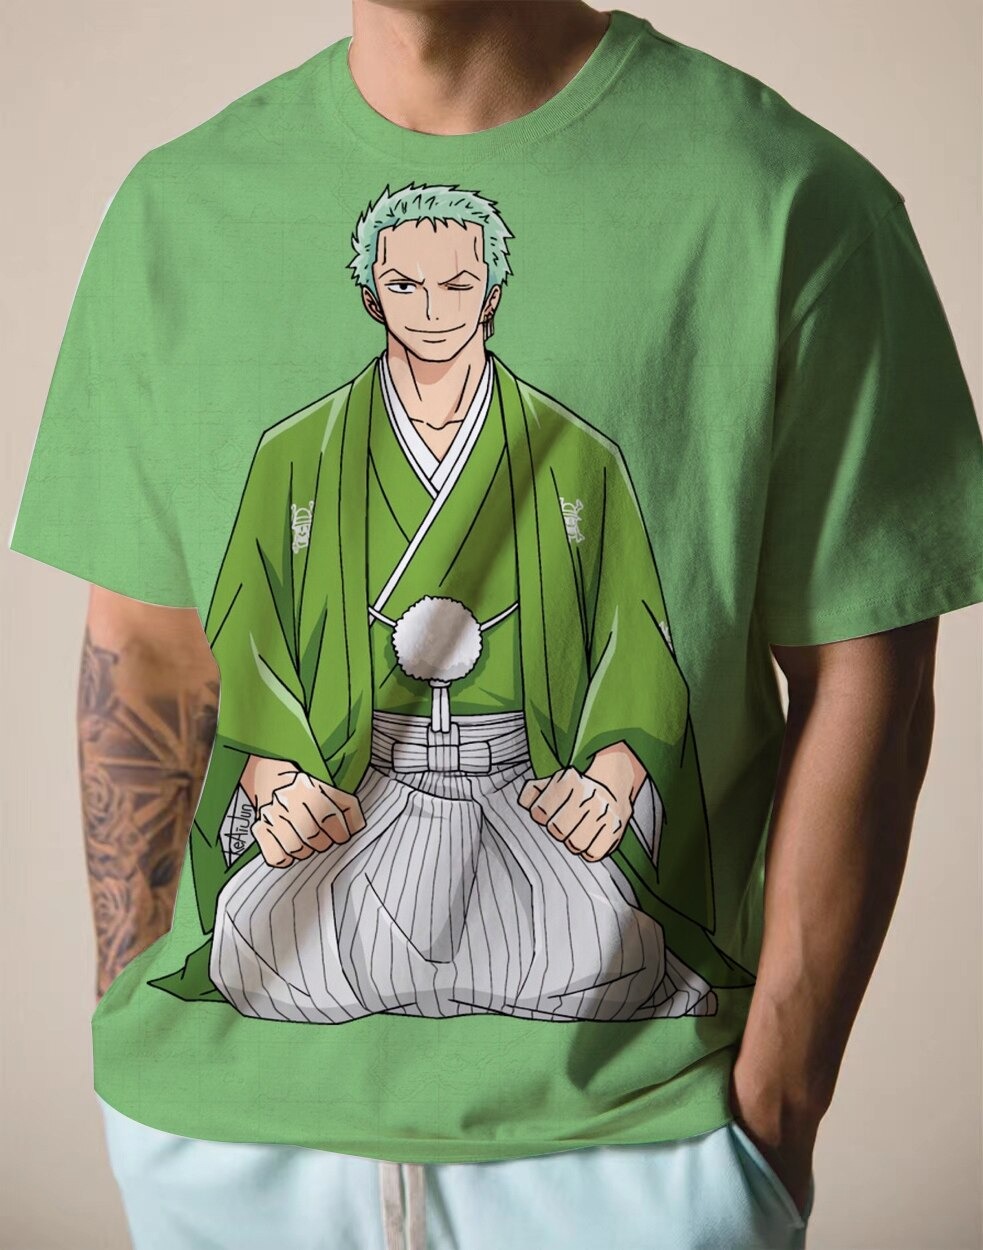 https://onepiece-merchandise.com/wp-content/uploads/2022/08/One-Piece-T-Shirt-Roronoa-Zoro.jpg